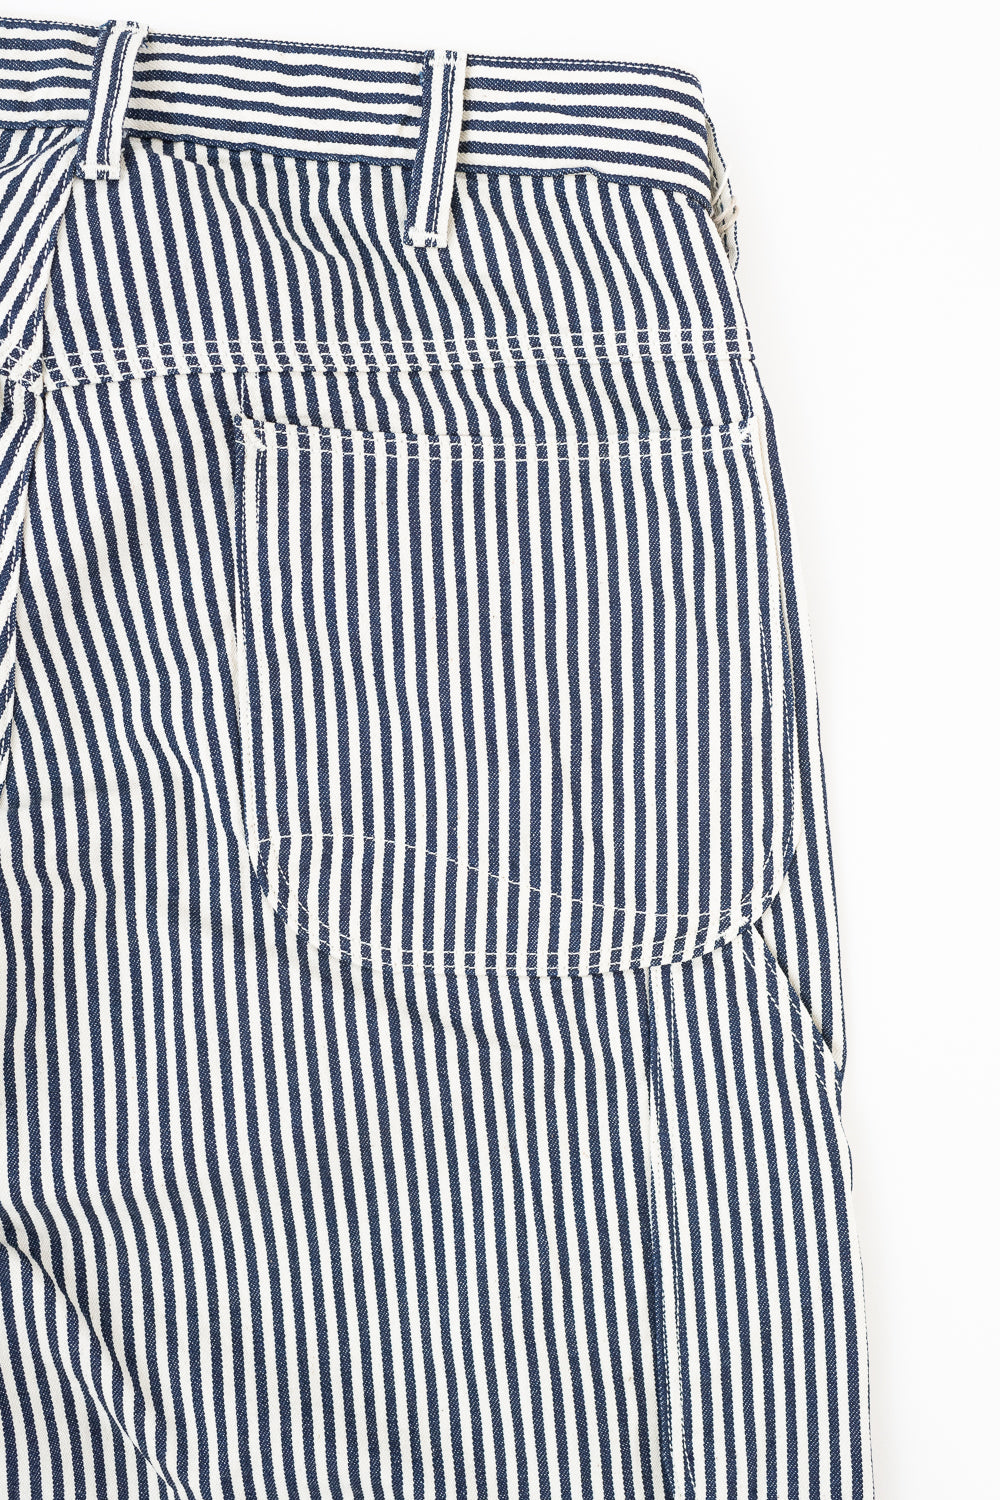 01-5120-181 - Painters Pants Hickory Denim Stripe Relax Fit - Indigo/Natural